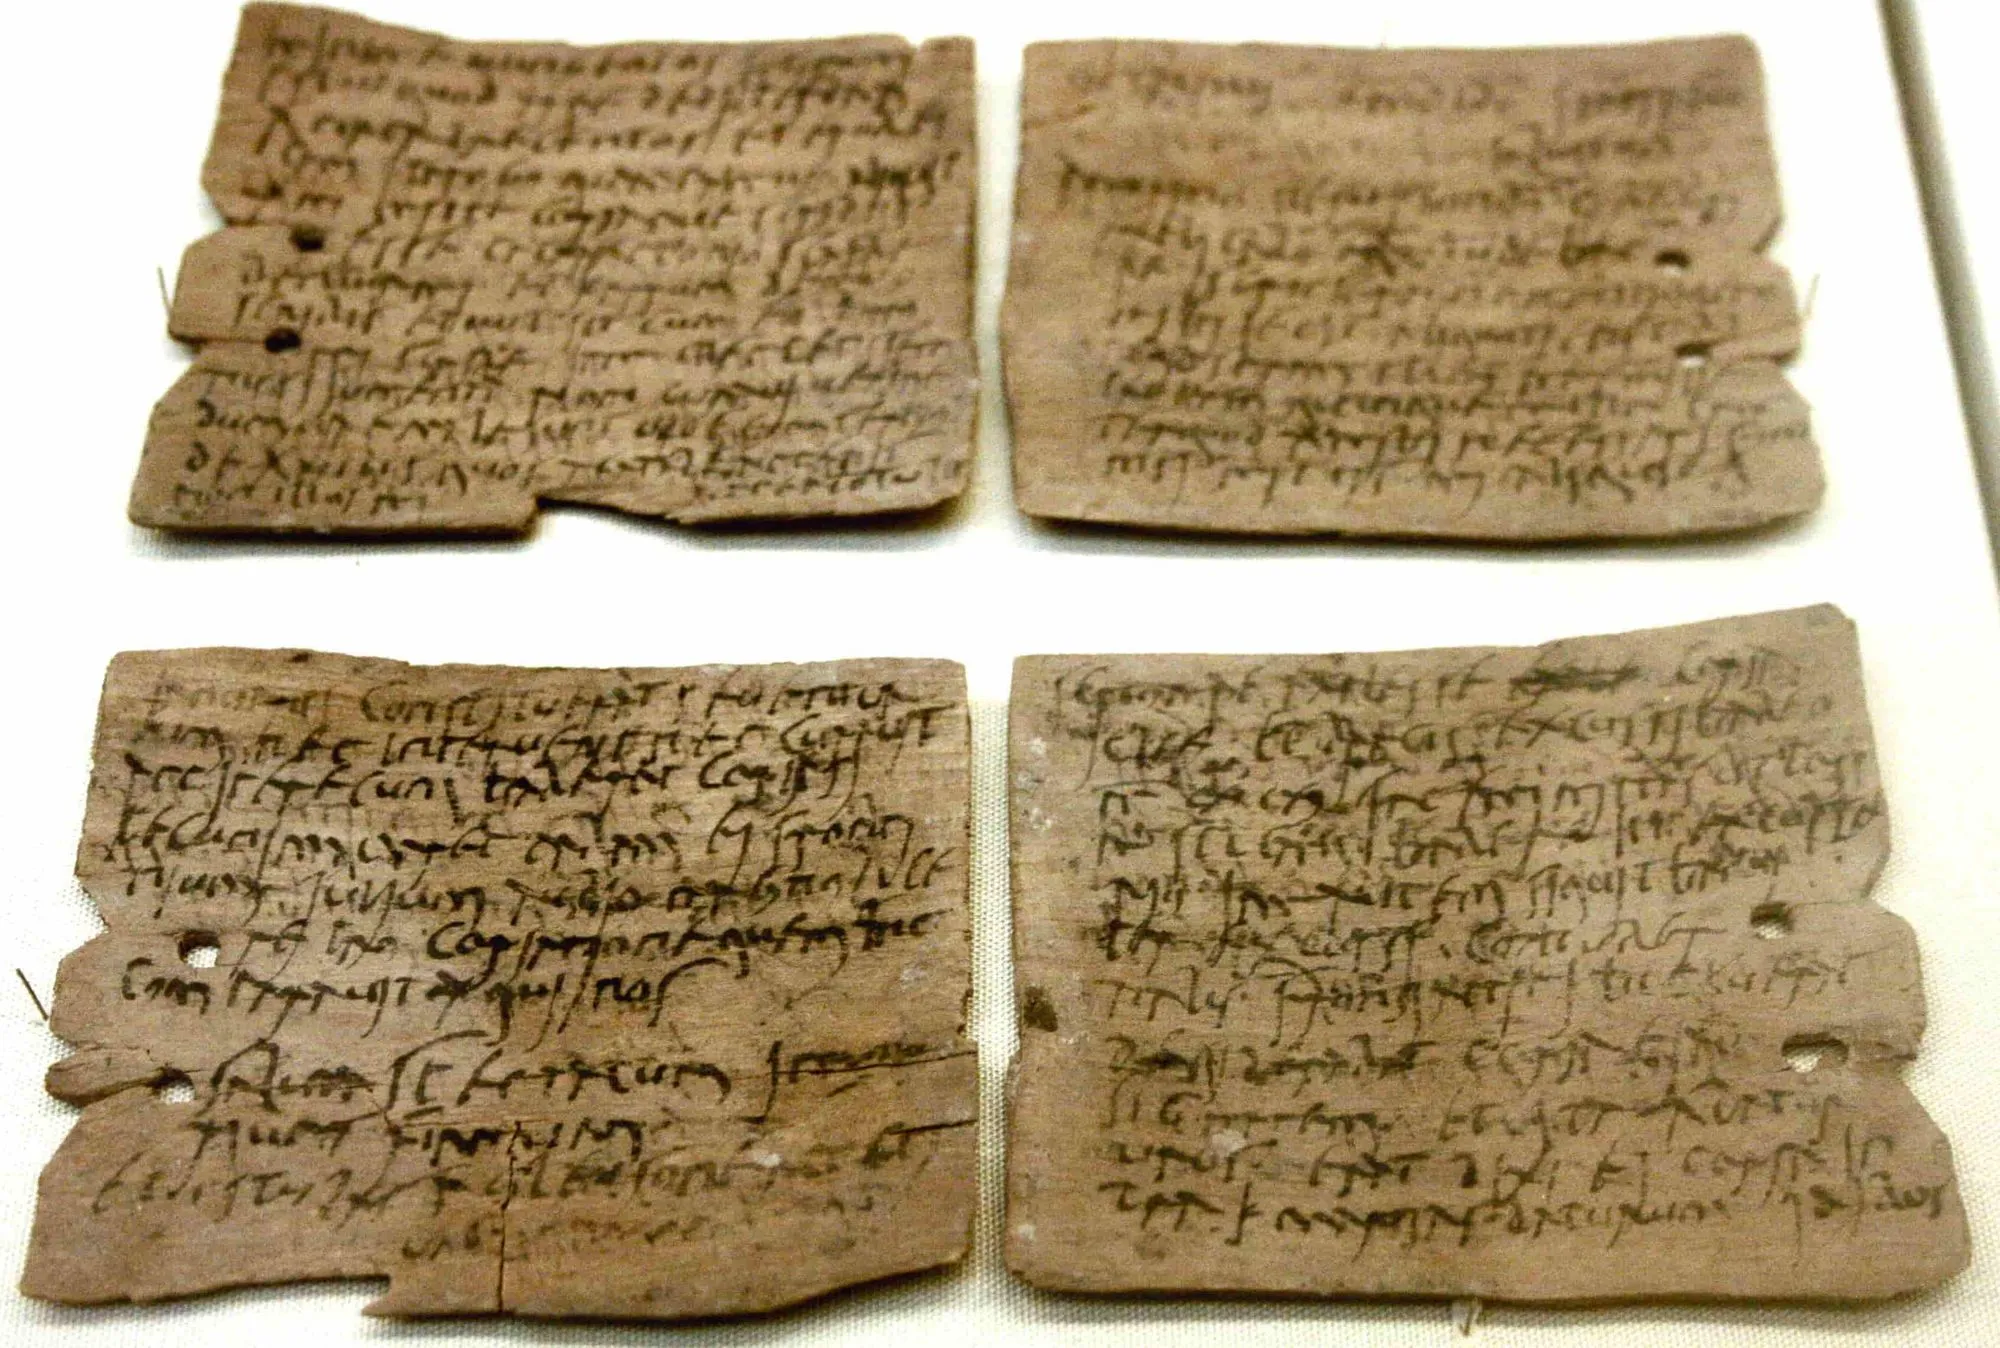 The tablets discovered at Vindolanda.